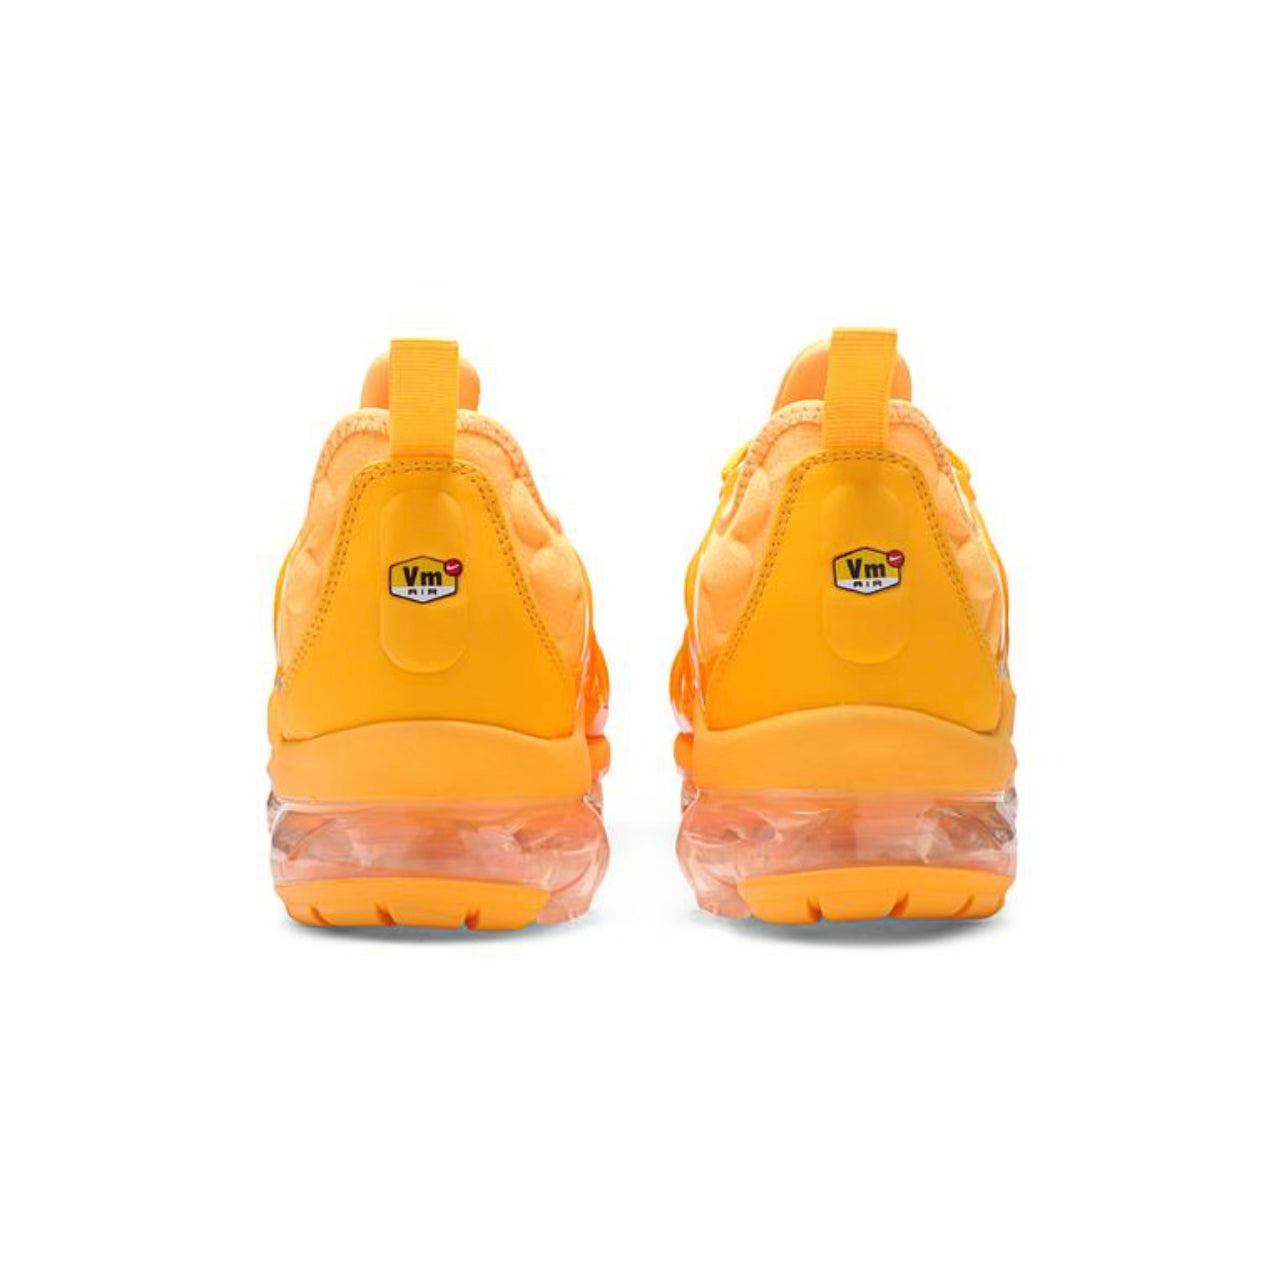 Nike Air Vapormax Plus "Orange"